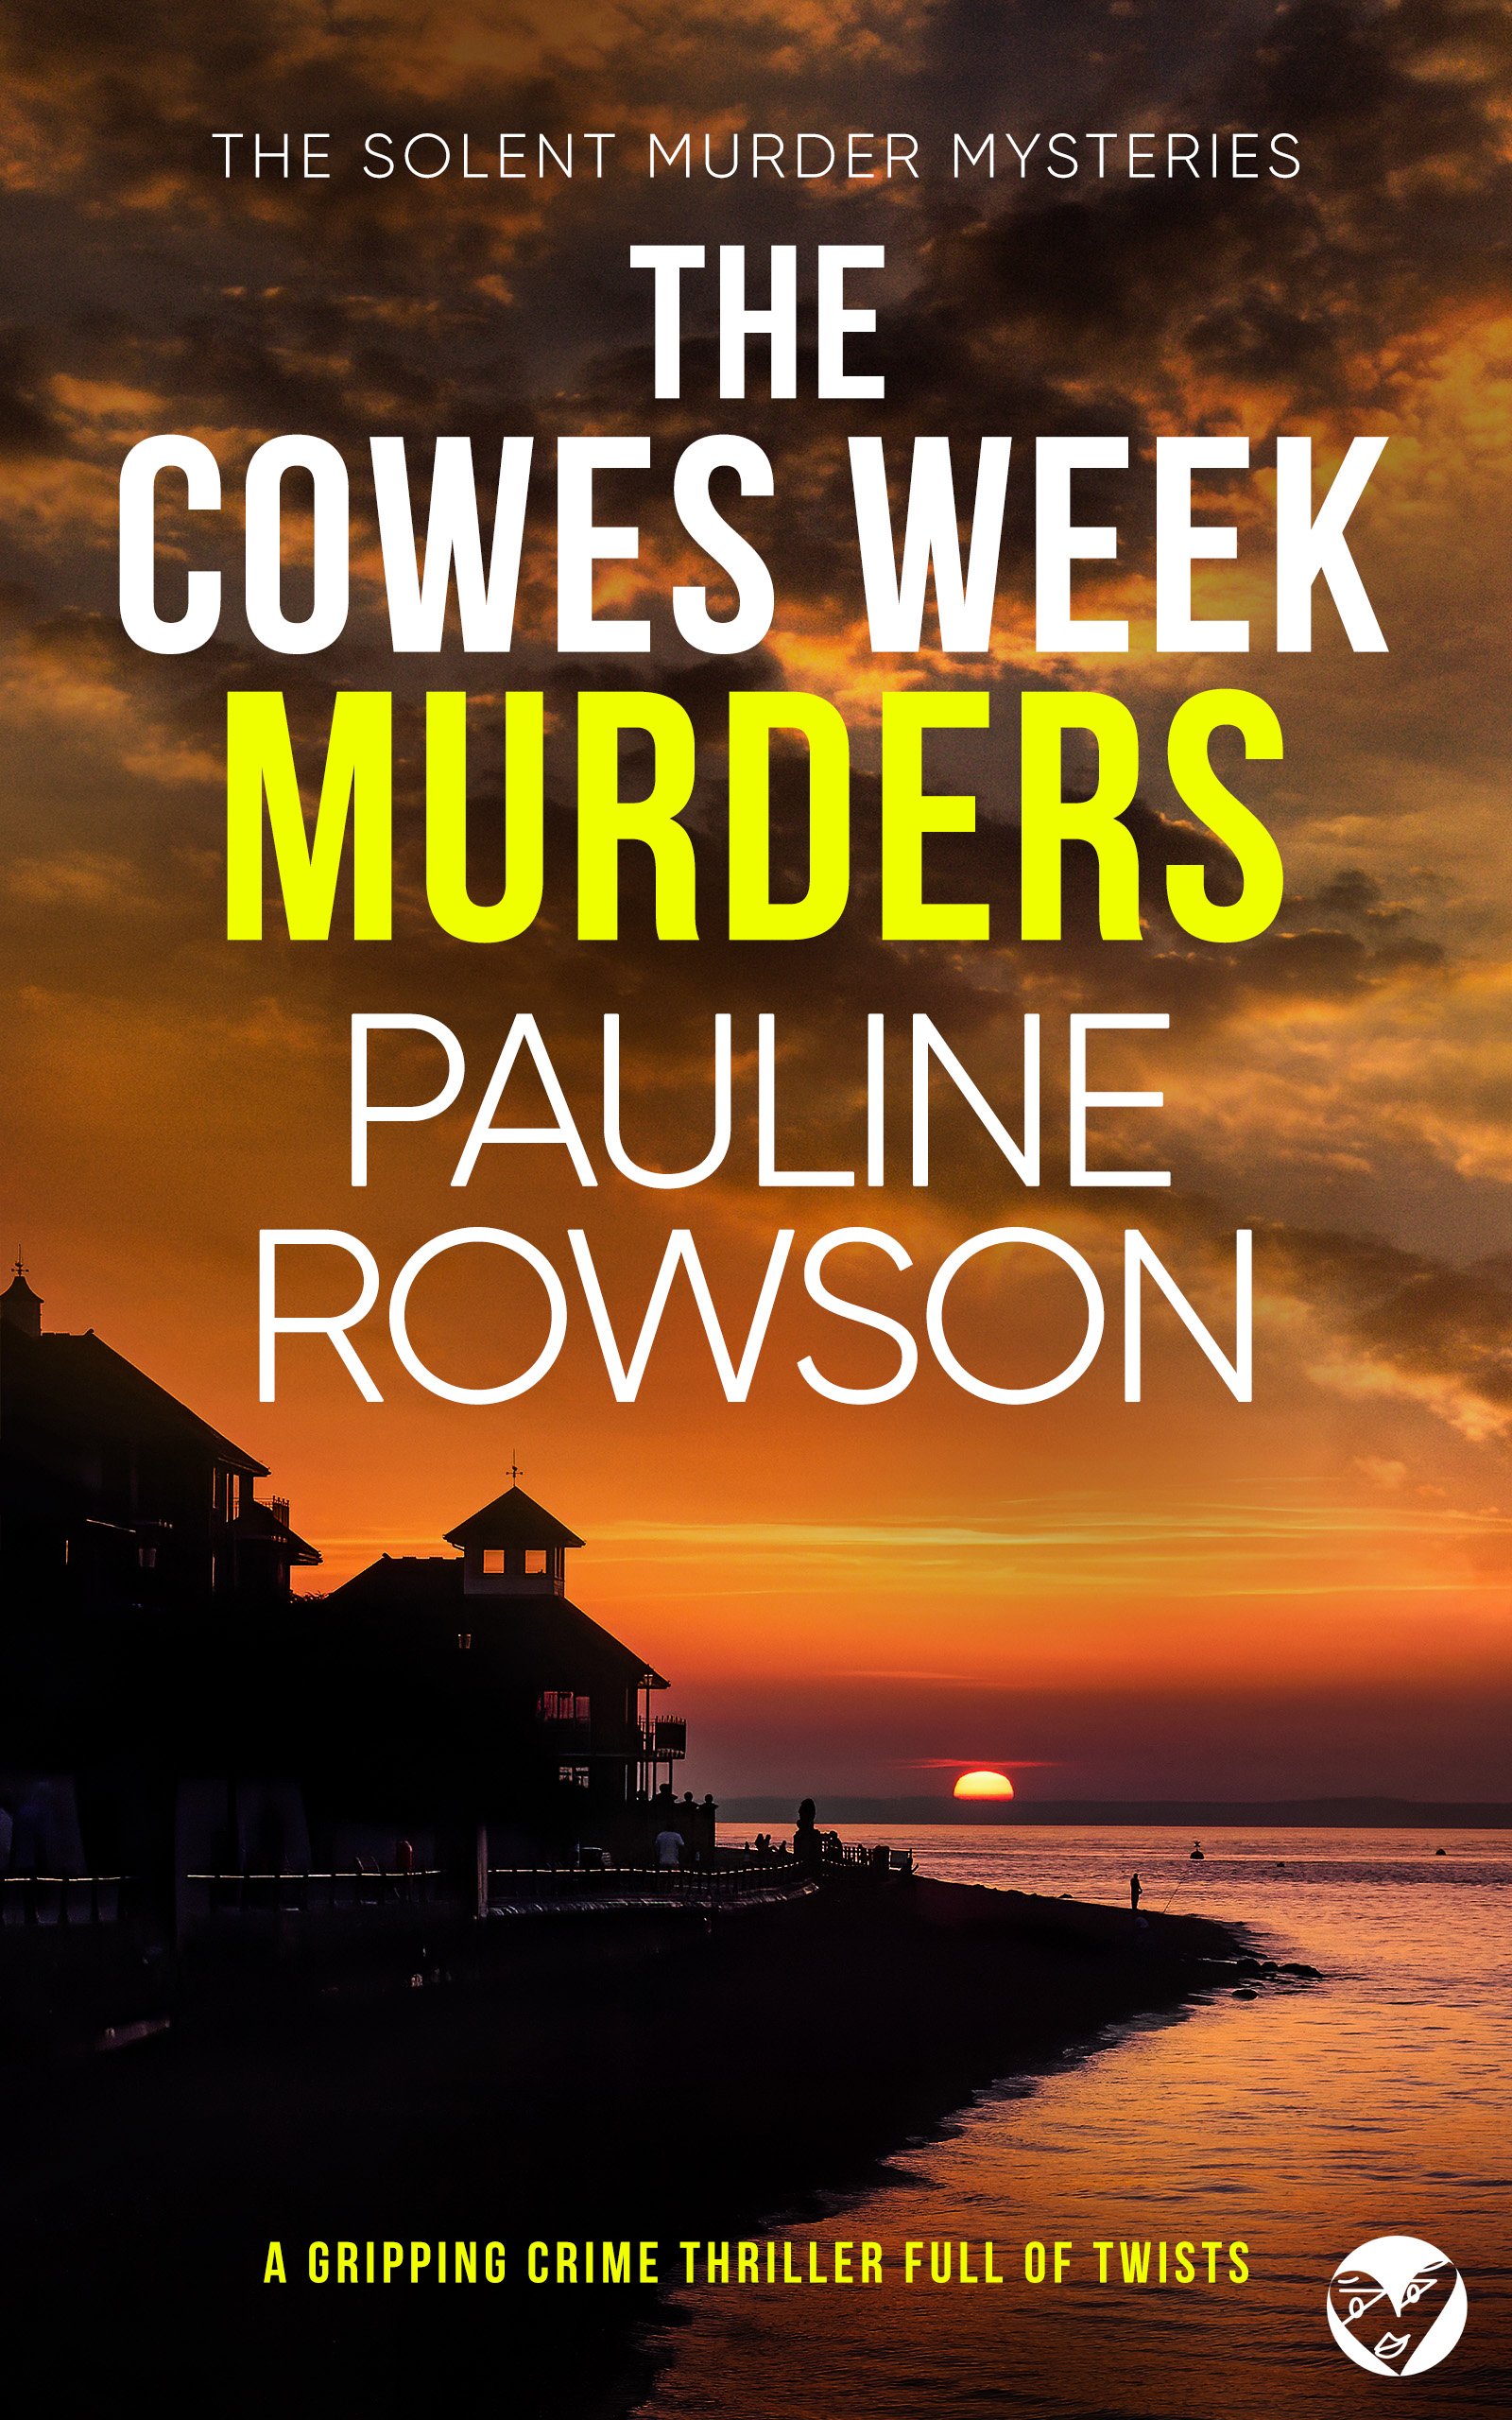 THE COWES WEEK MURDERS Cover publish.jpg